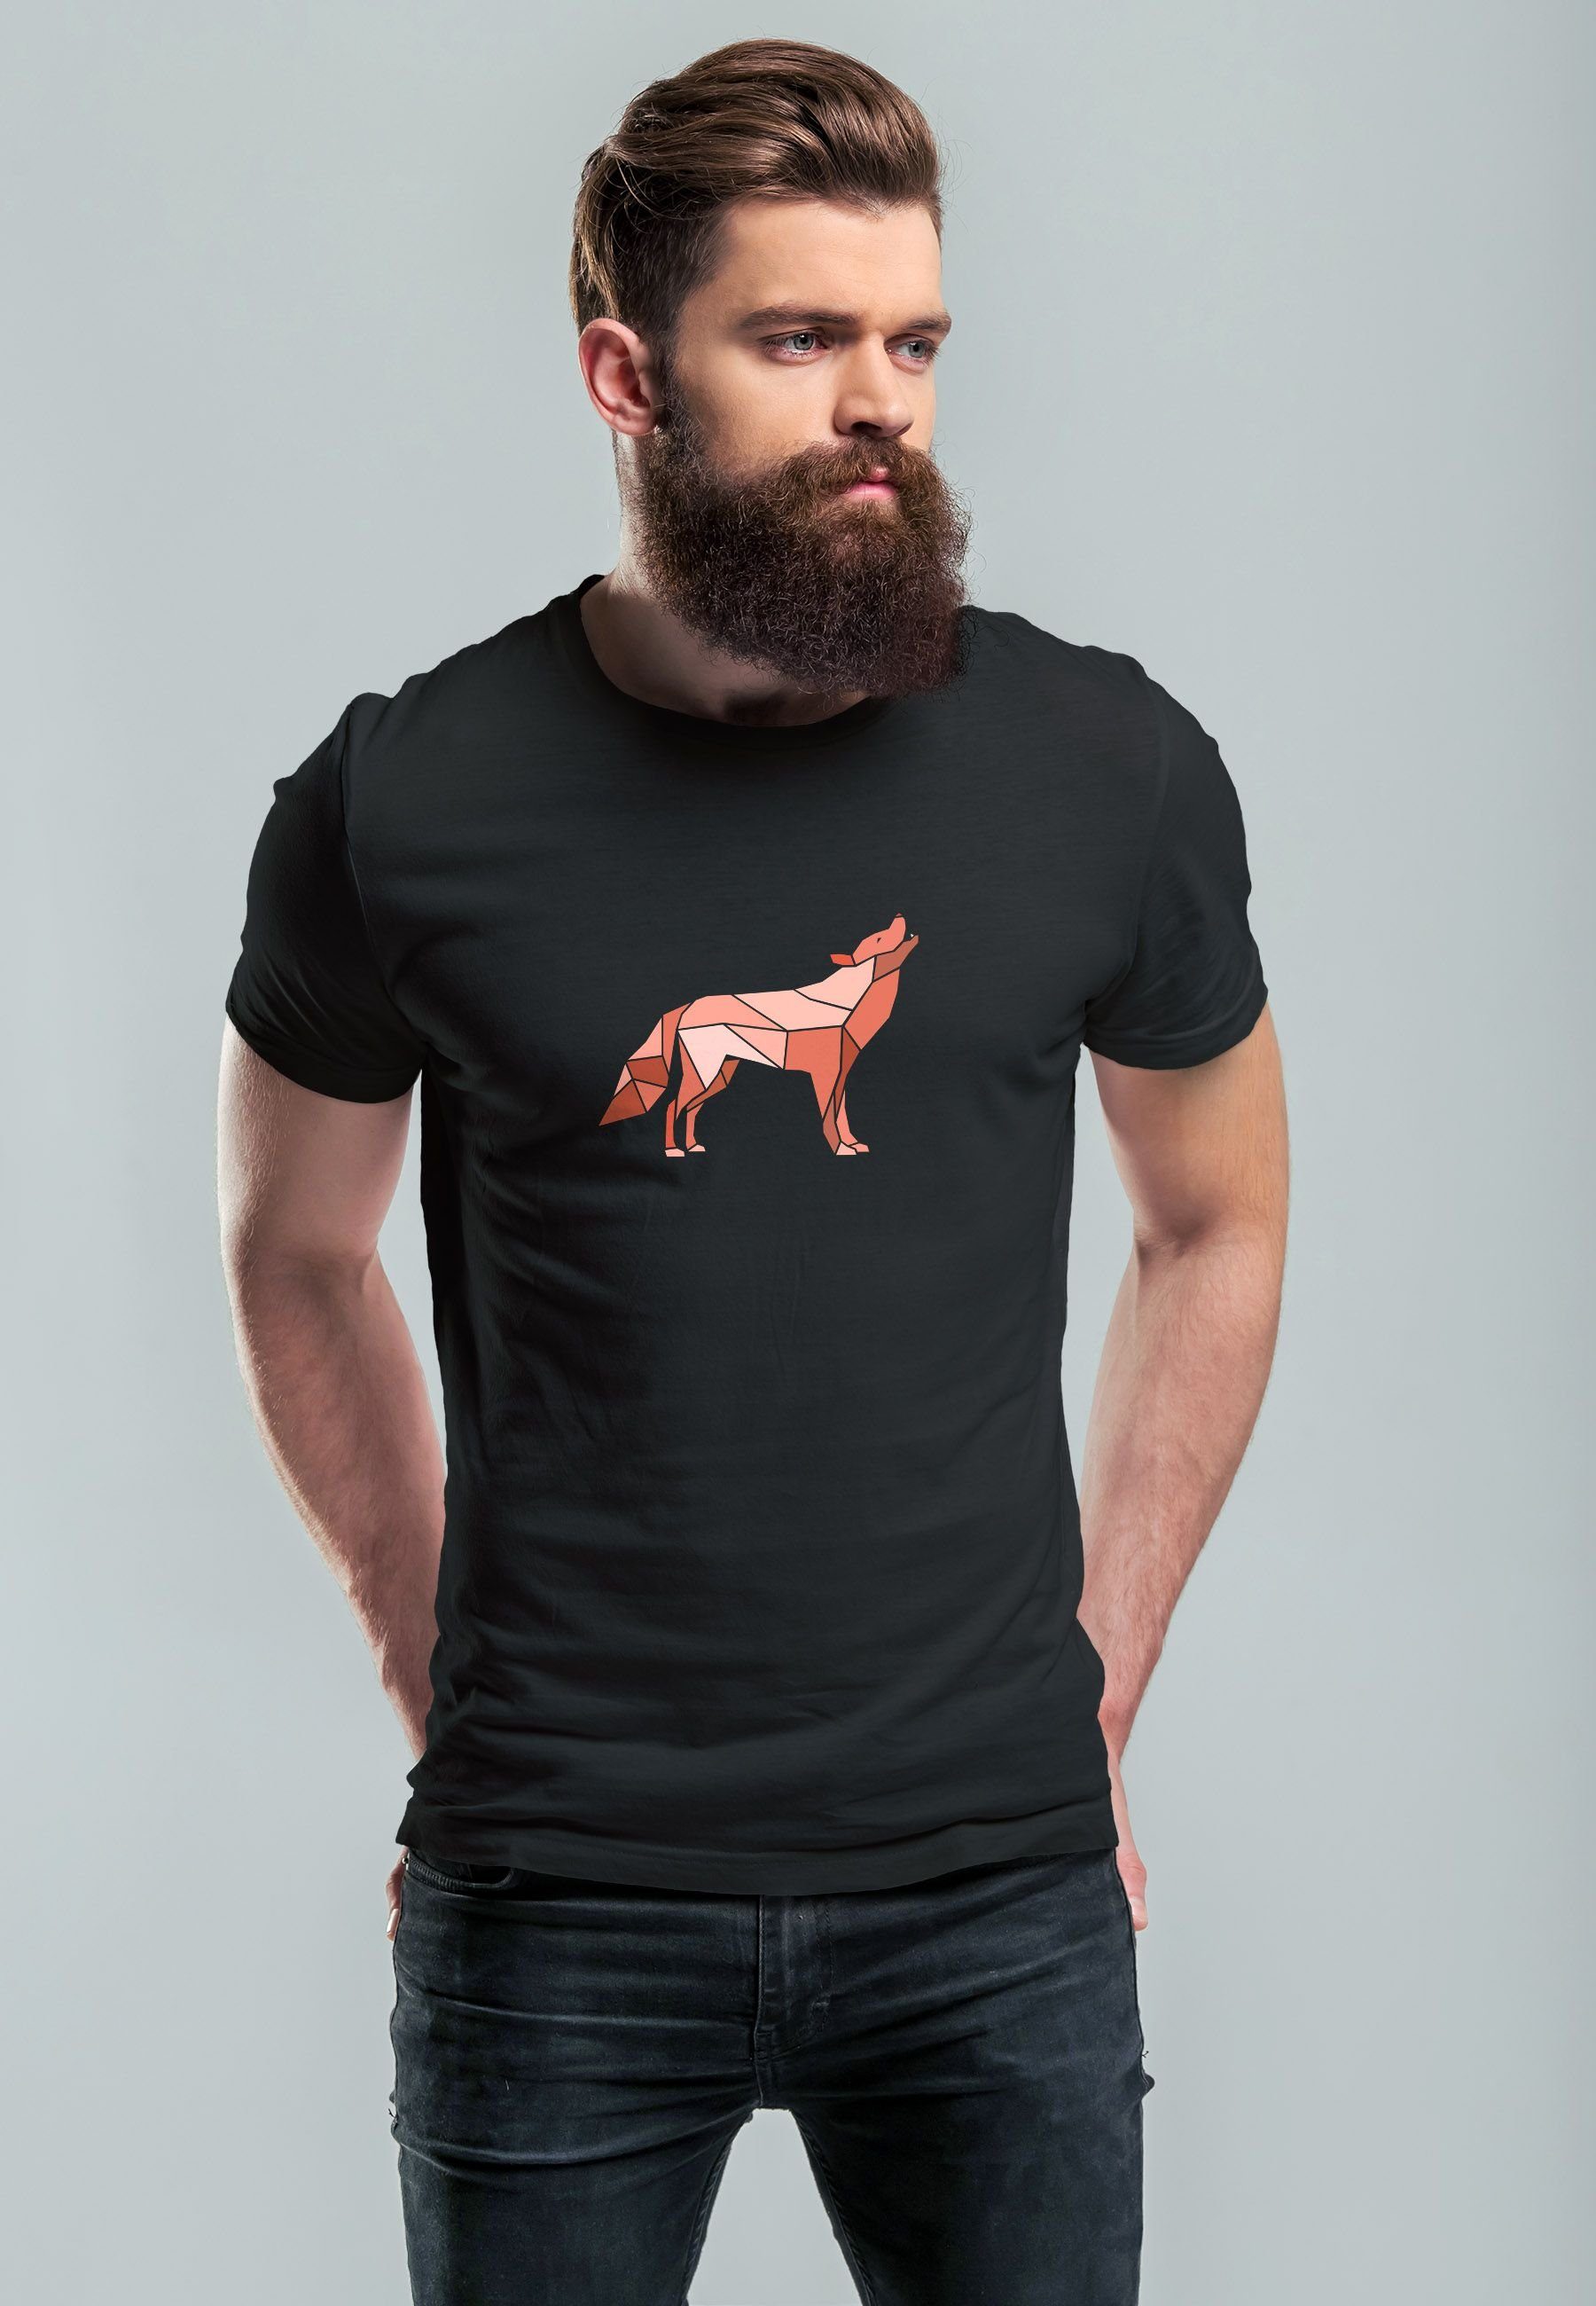 Neverless Print-Shirt Tiermotiv Outdoor schwarz T-Shirt Fashion Print Herren Bedruckt mit Polygon Wolf Grafik